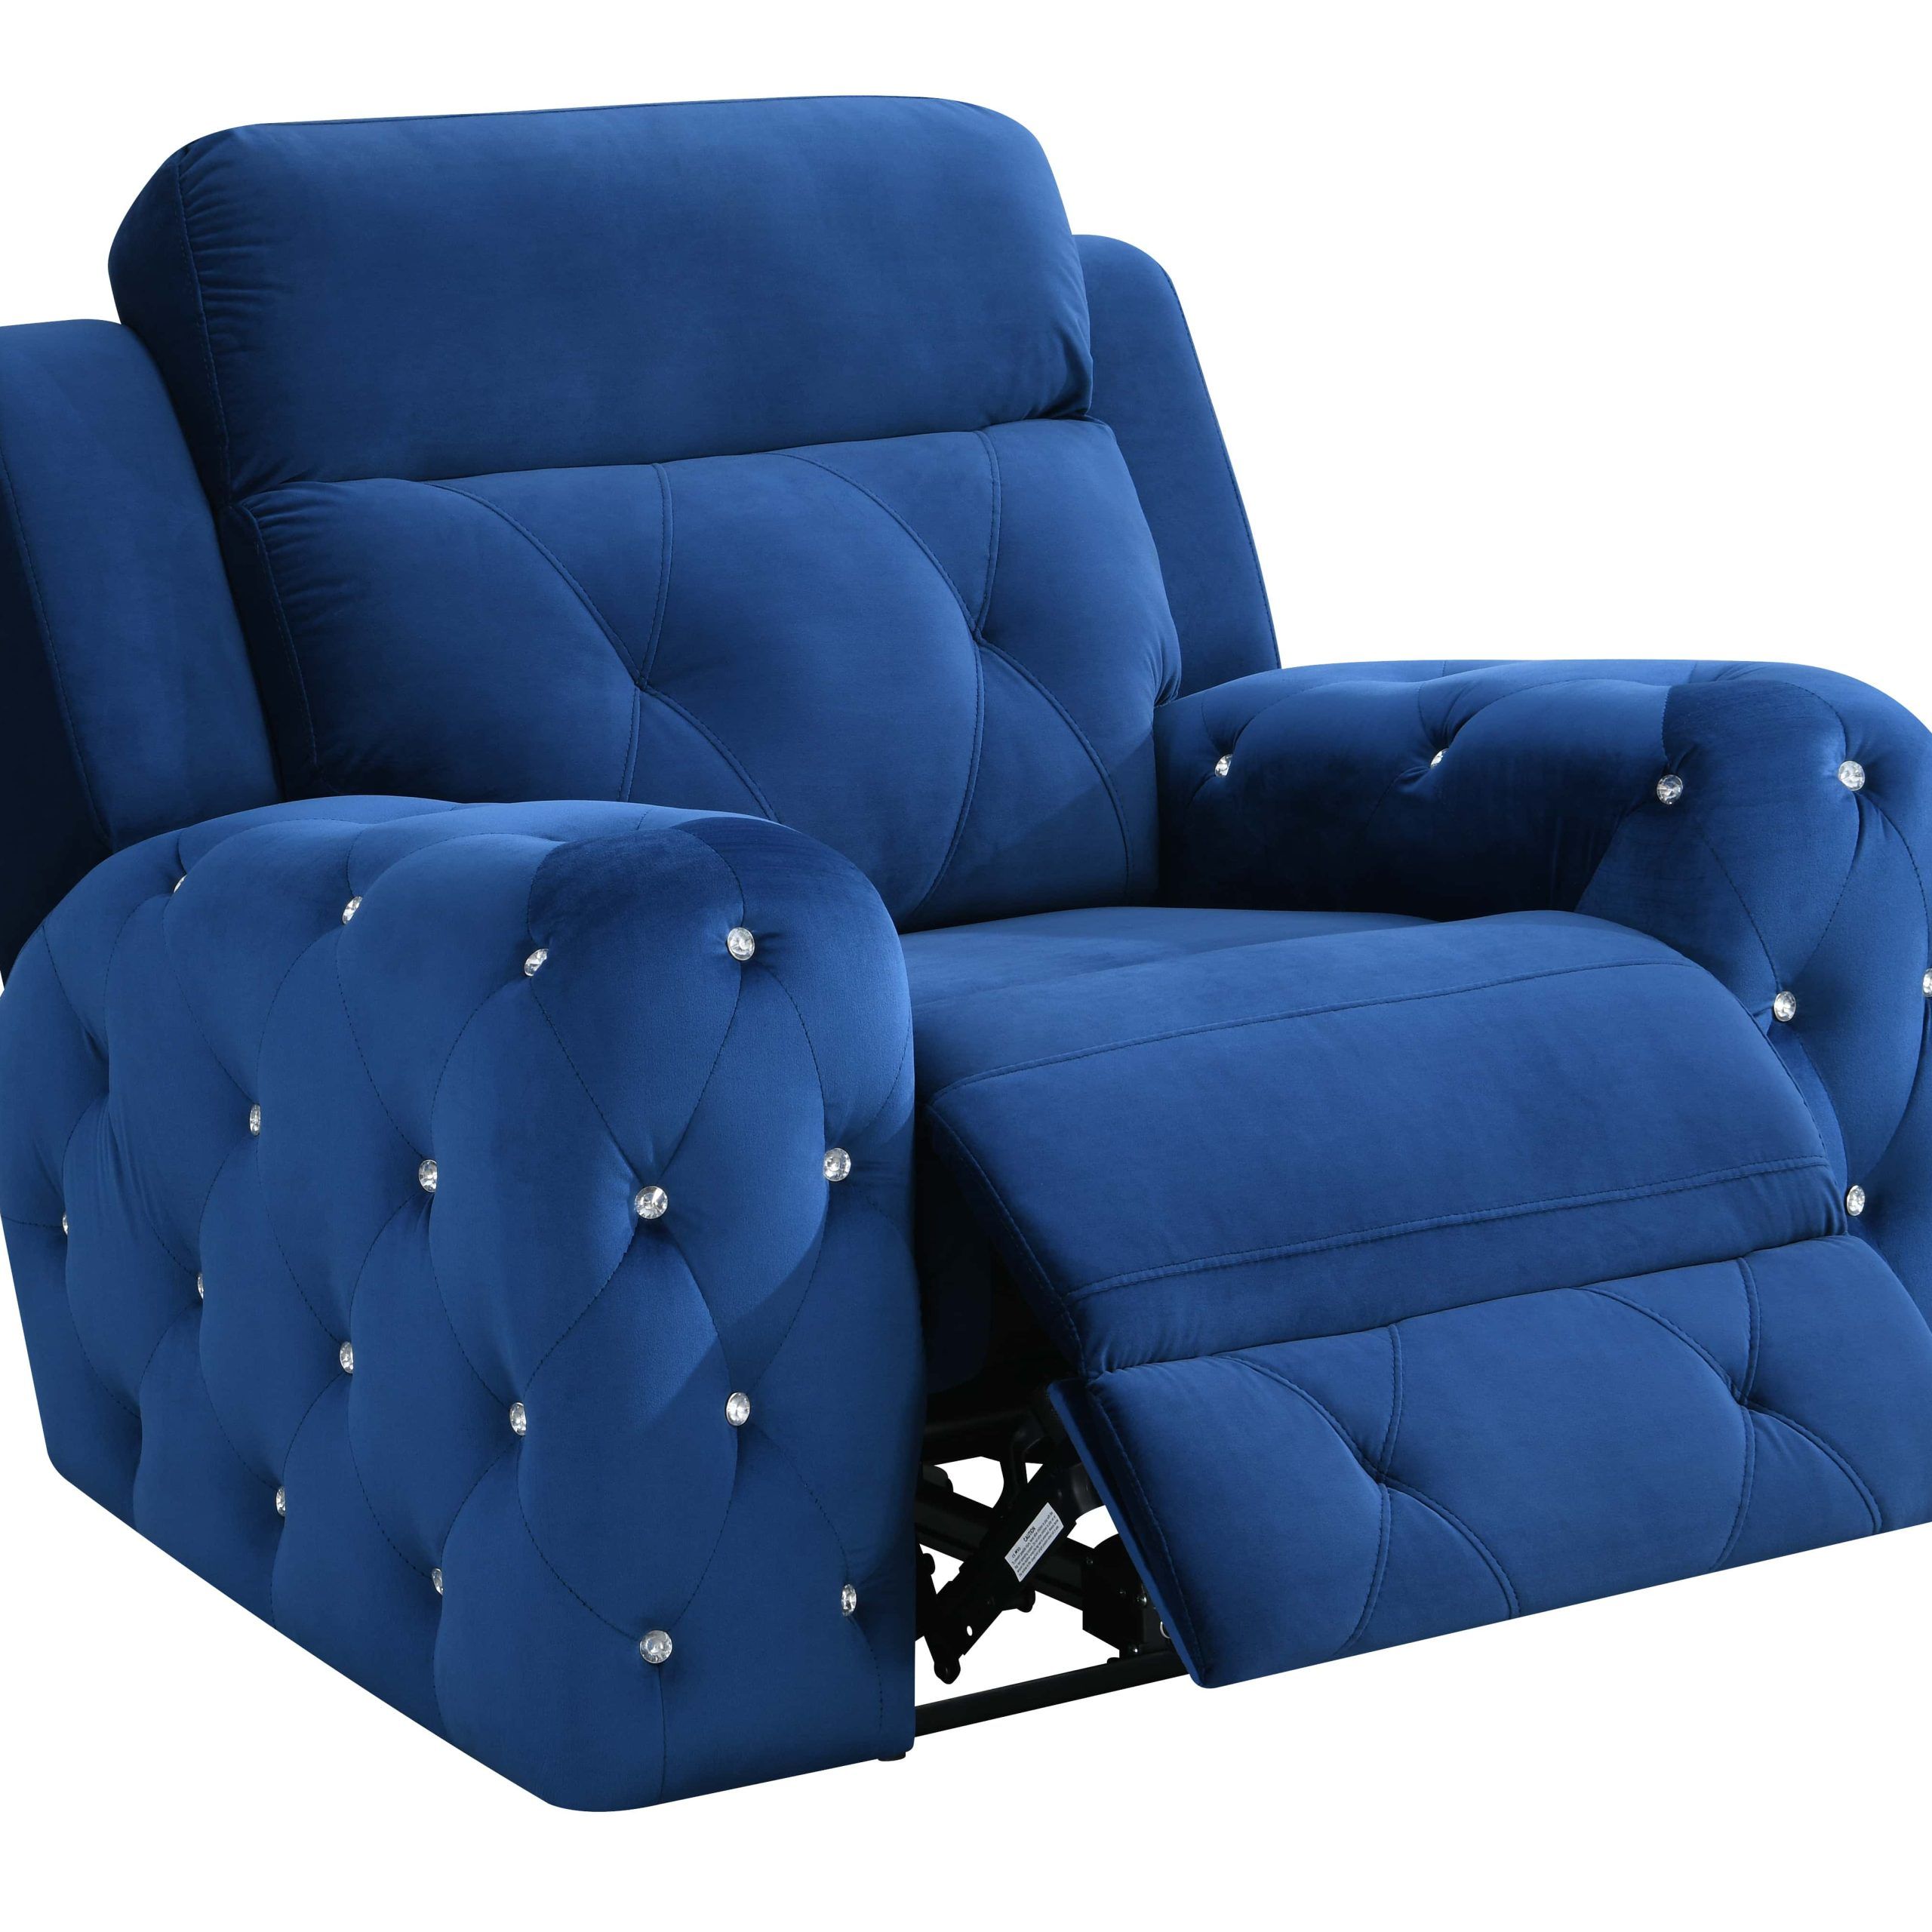 U8311 Blue Velvet Power Recliner Chairglobal Furniture With Regard To Modern Velvet Upholstered Recliner Chairs (Gallery 16 of 20)